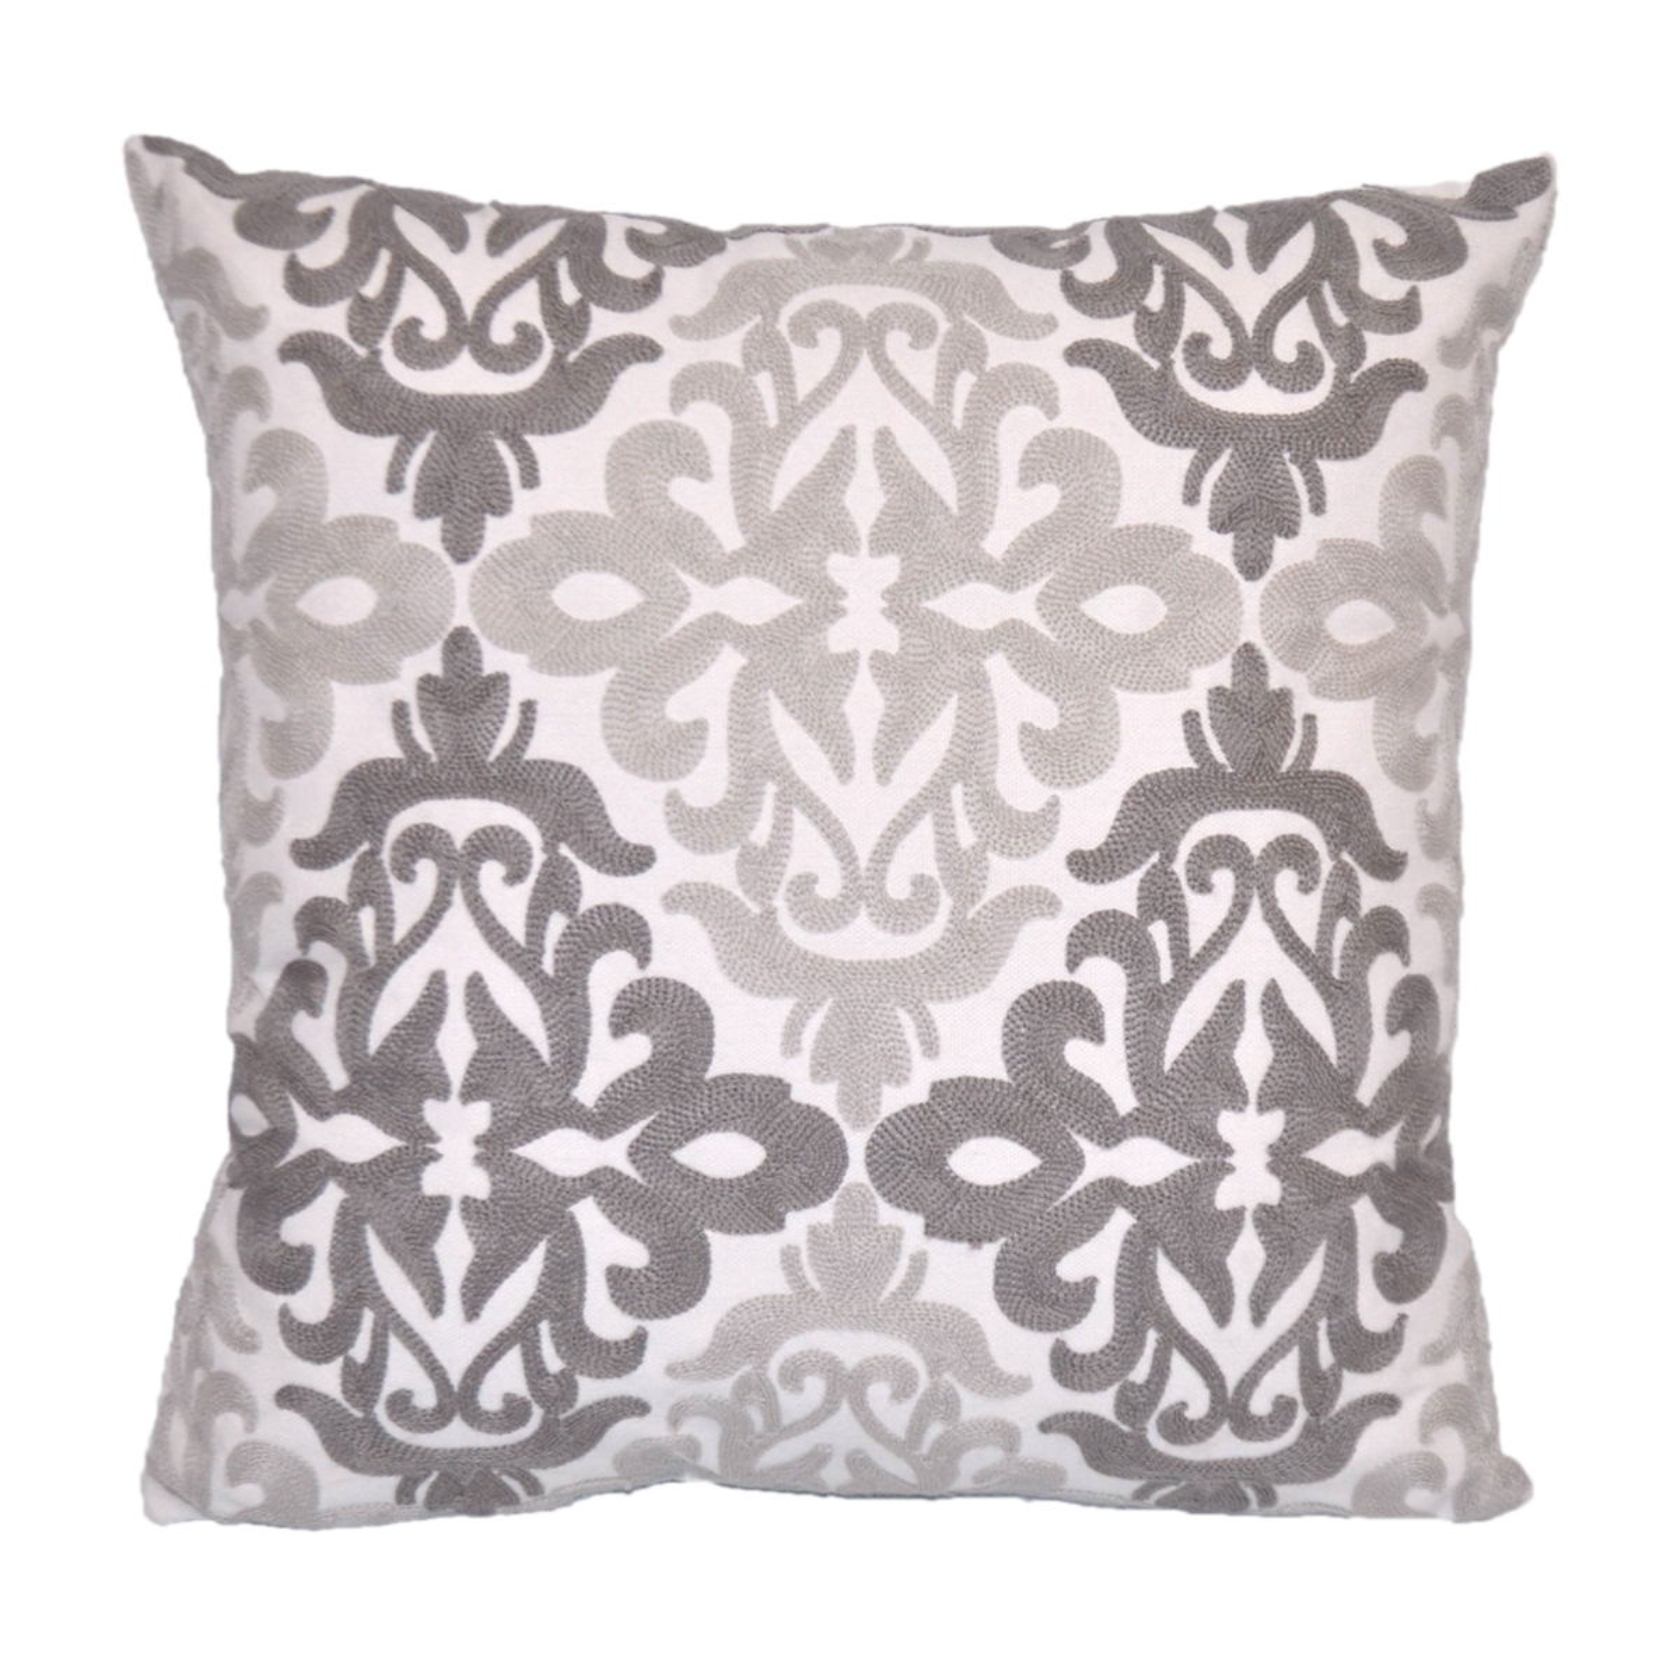 Route 66 17 x 17" Decorative Pillow &#8211; Grey Damask